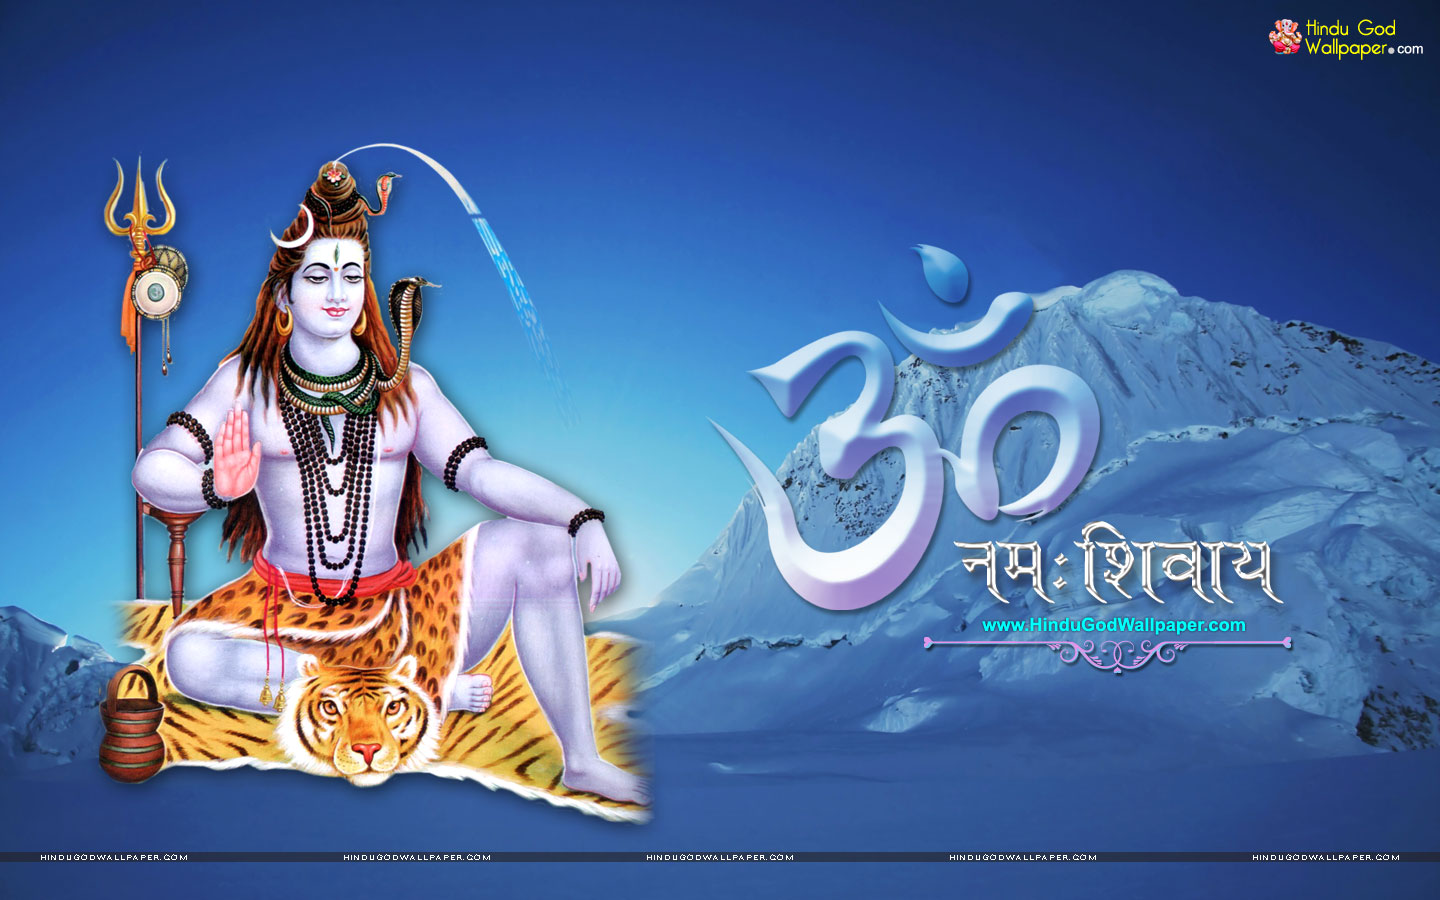 Om Shiva Wallpaper - Free HD Wallpapers Download